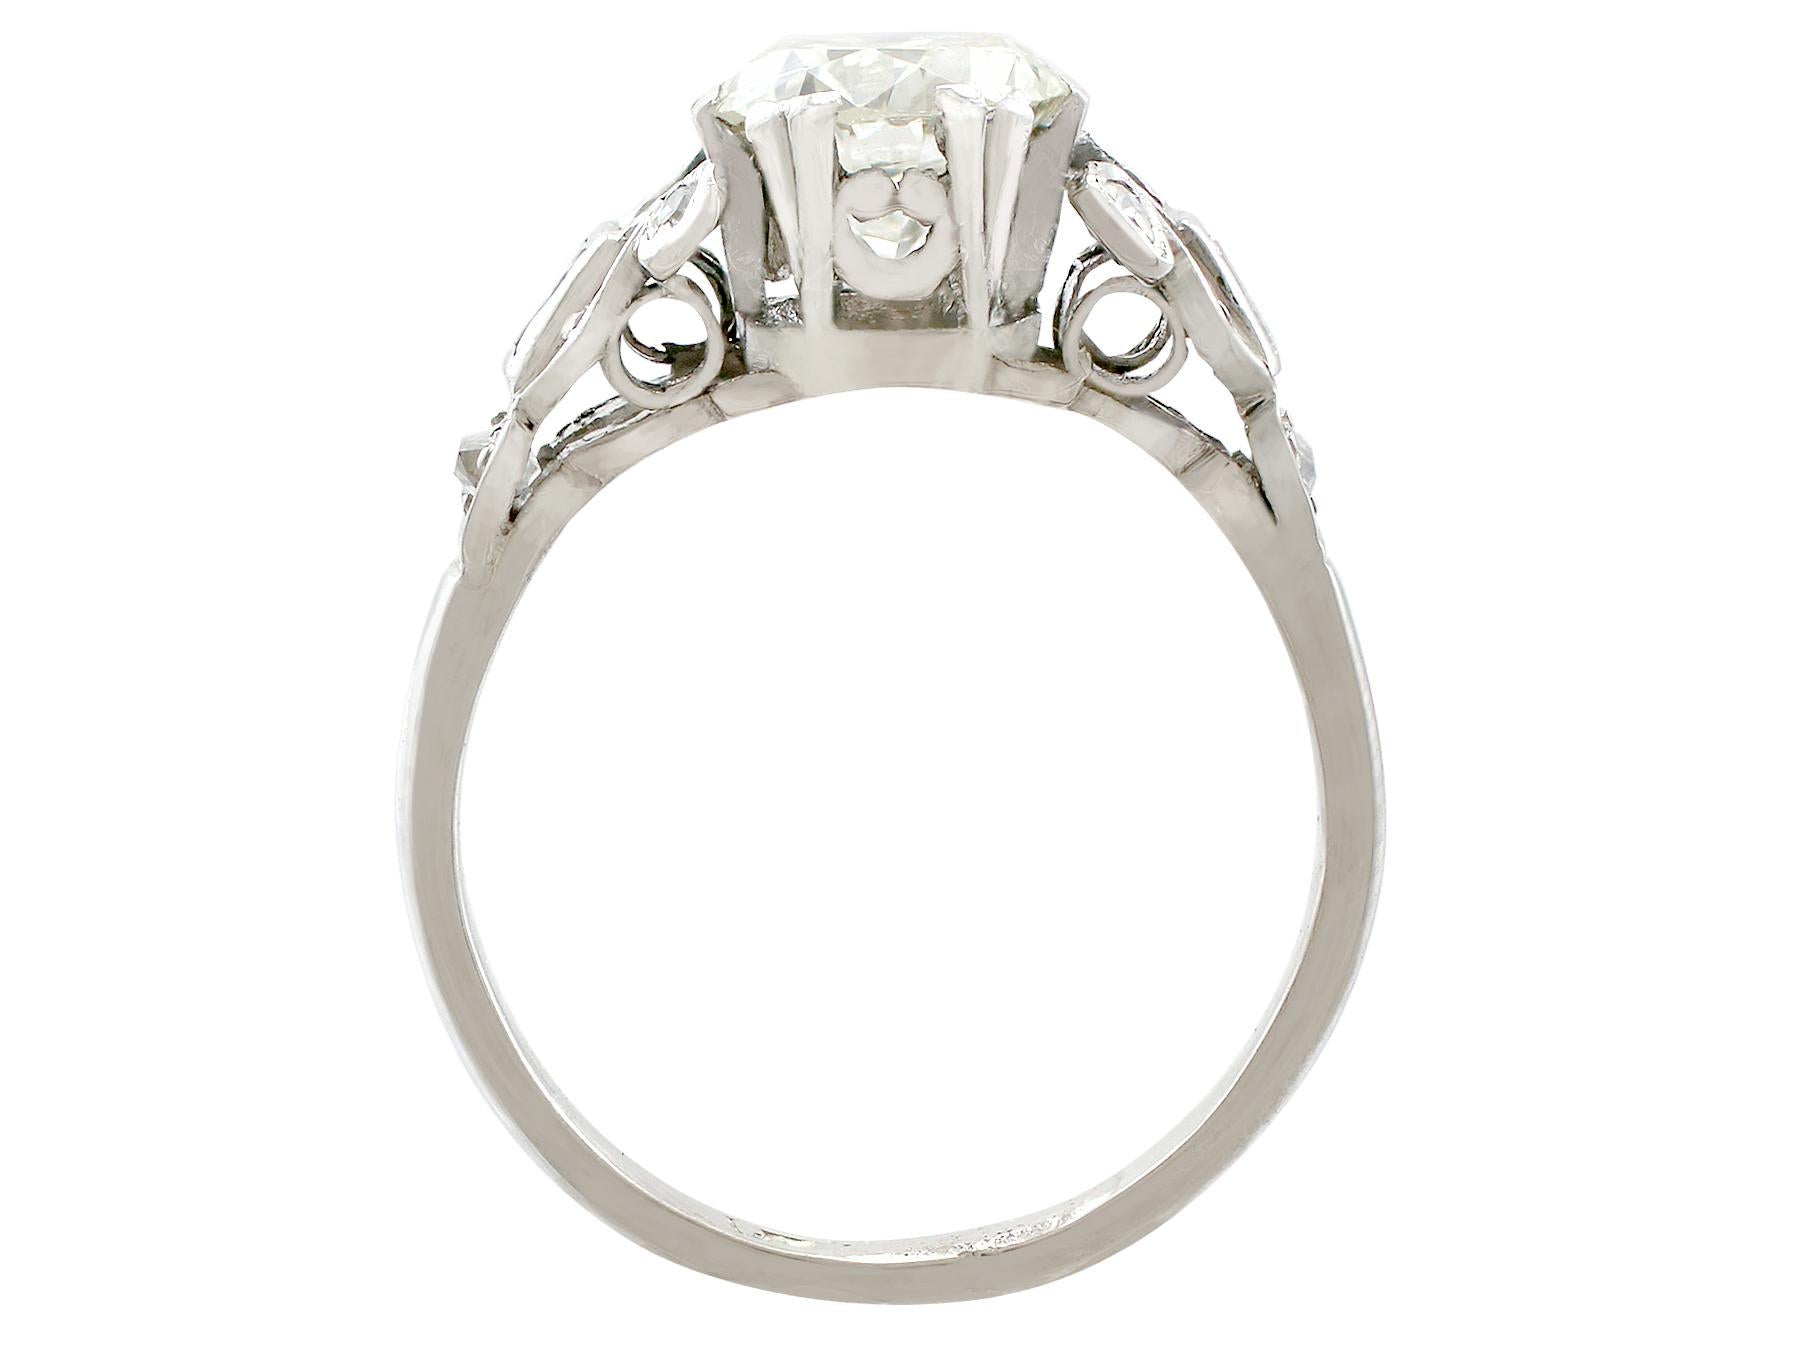 150 carat diamond ring